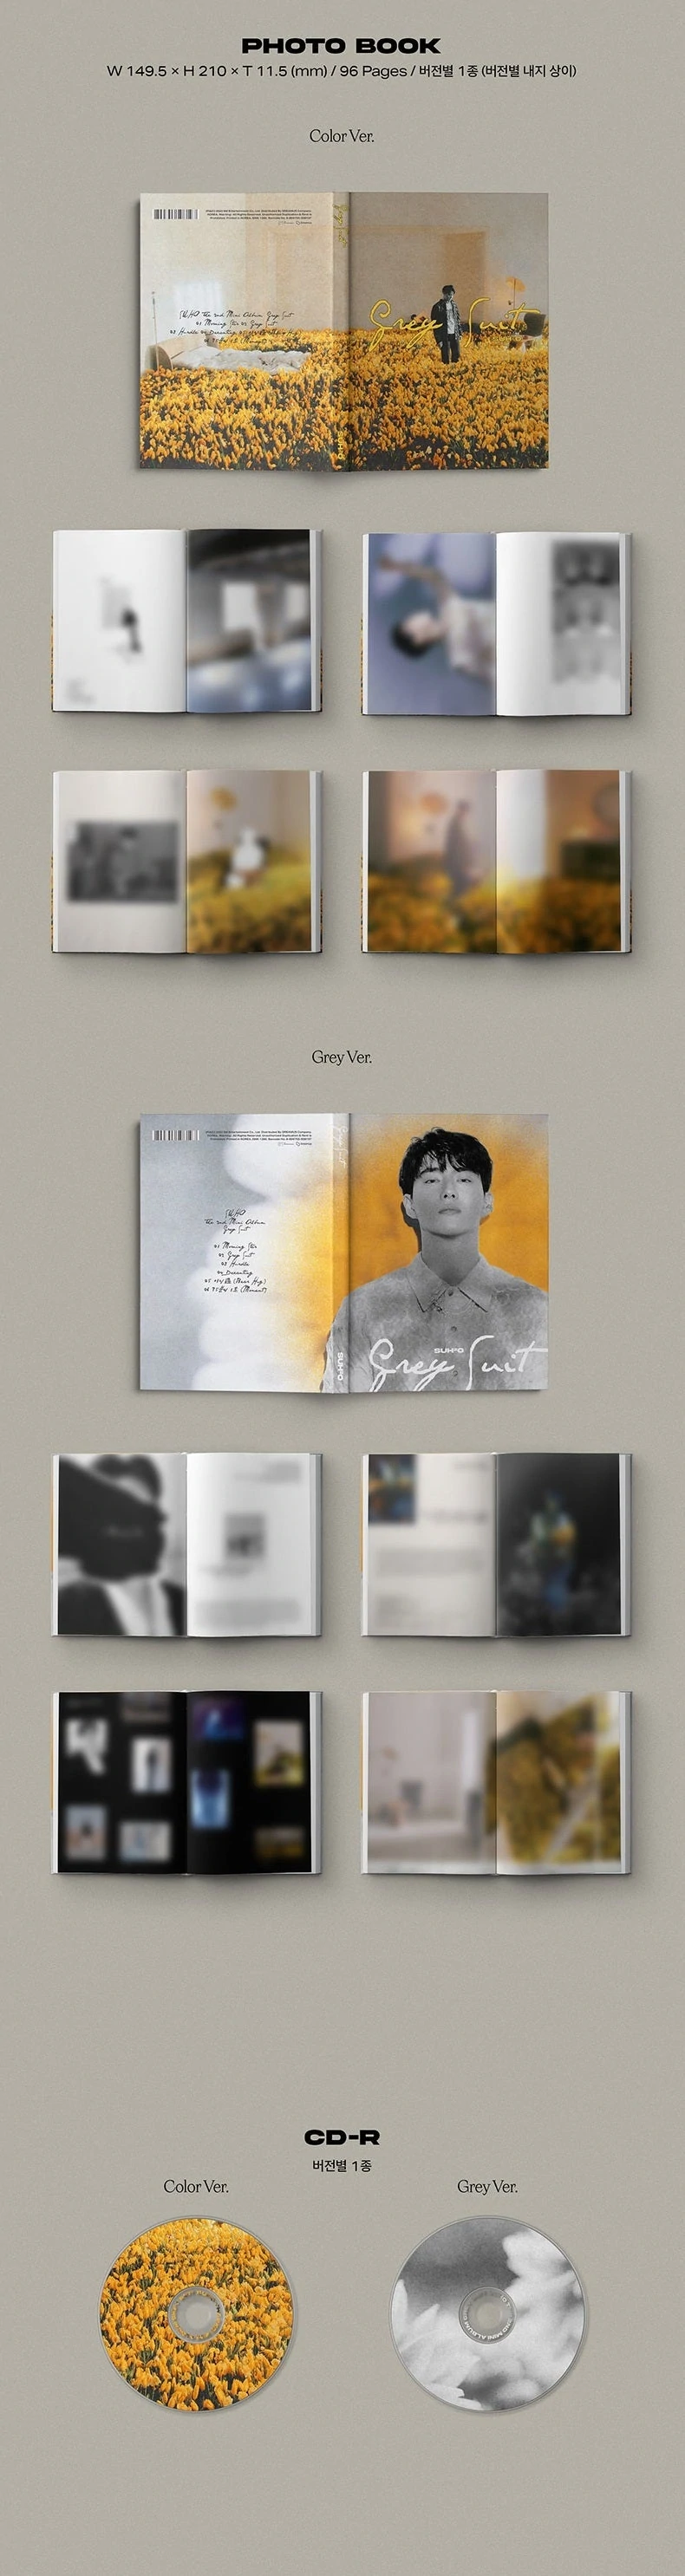 EXO: Suho Mini Album Vol. 2 - Grey Suit